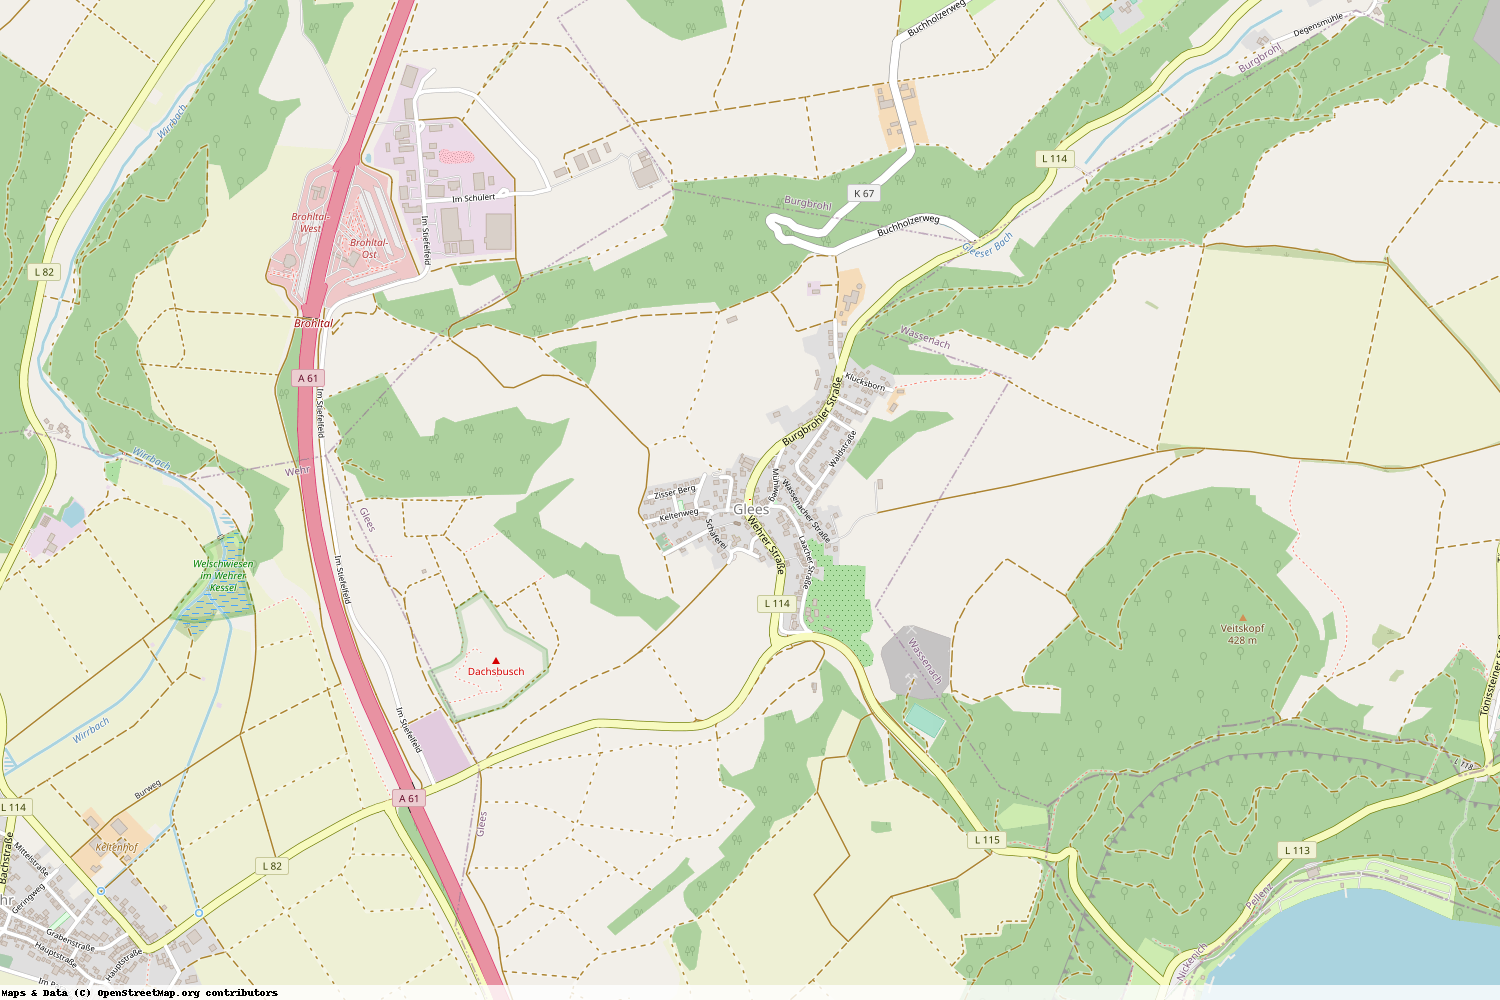 Ist gerade Stromausfall in Rheinland-Pfalz - Ahrweiler - Glees?